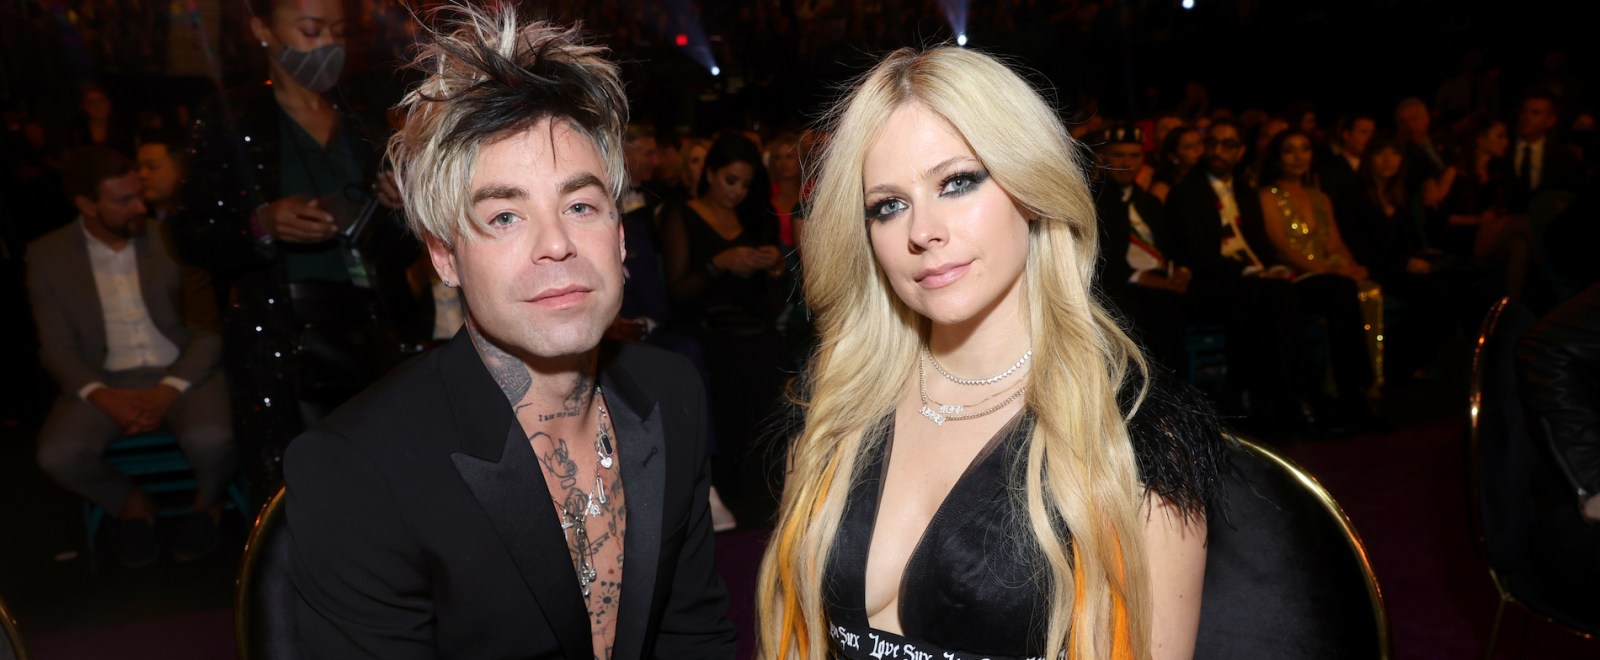 Mod Sun Avril Lavigne 64th Annual Grammy Awards 2022